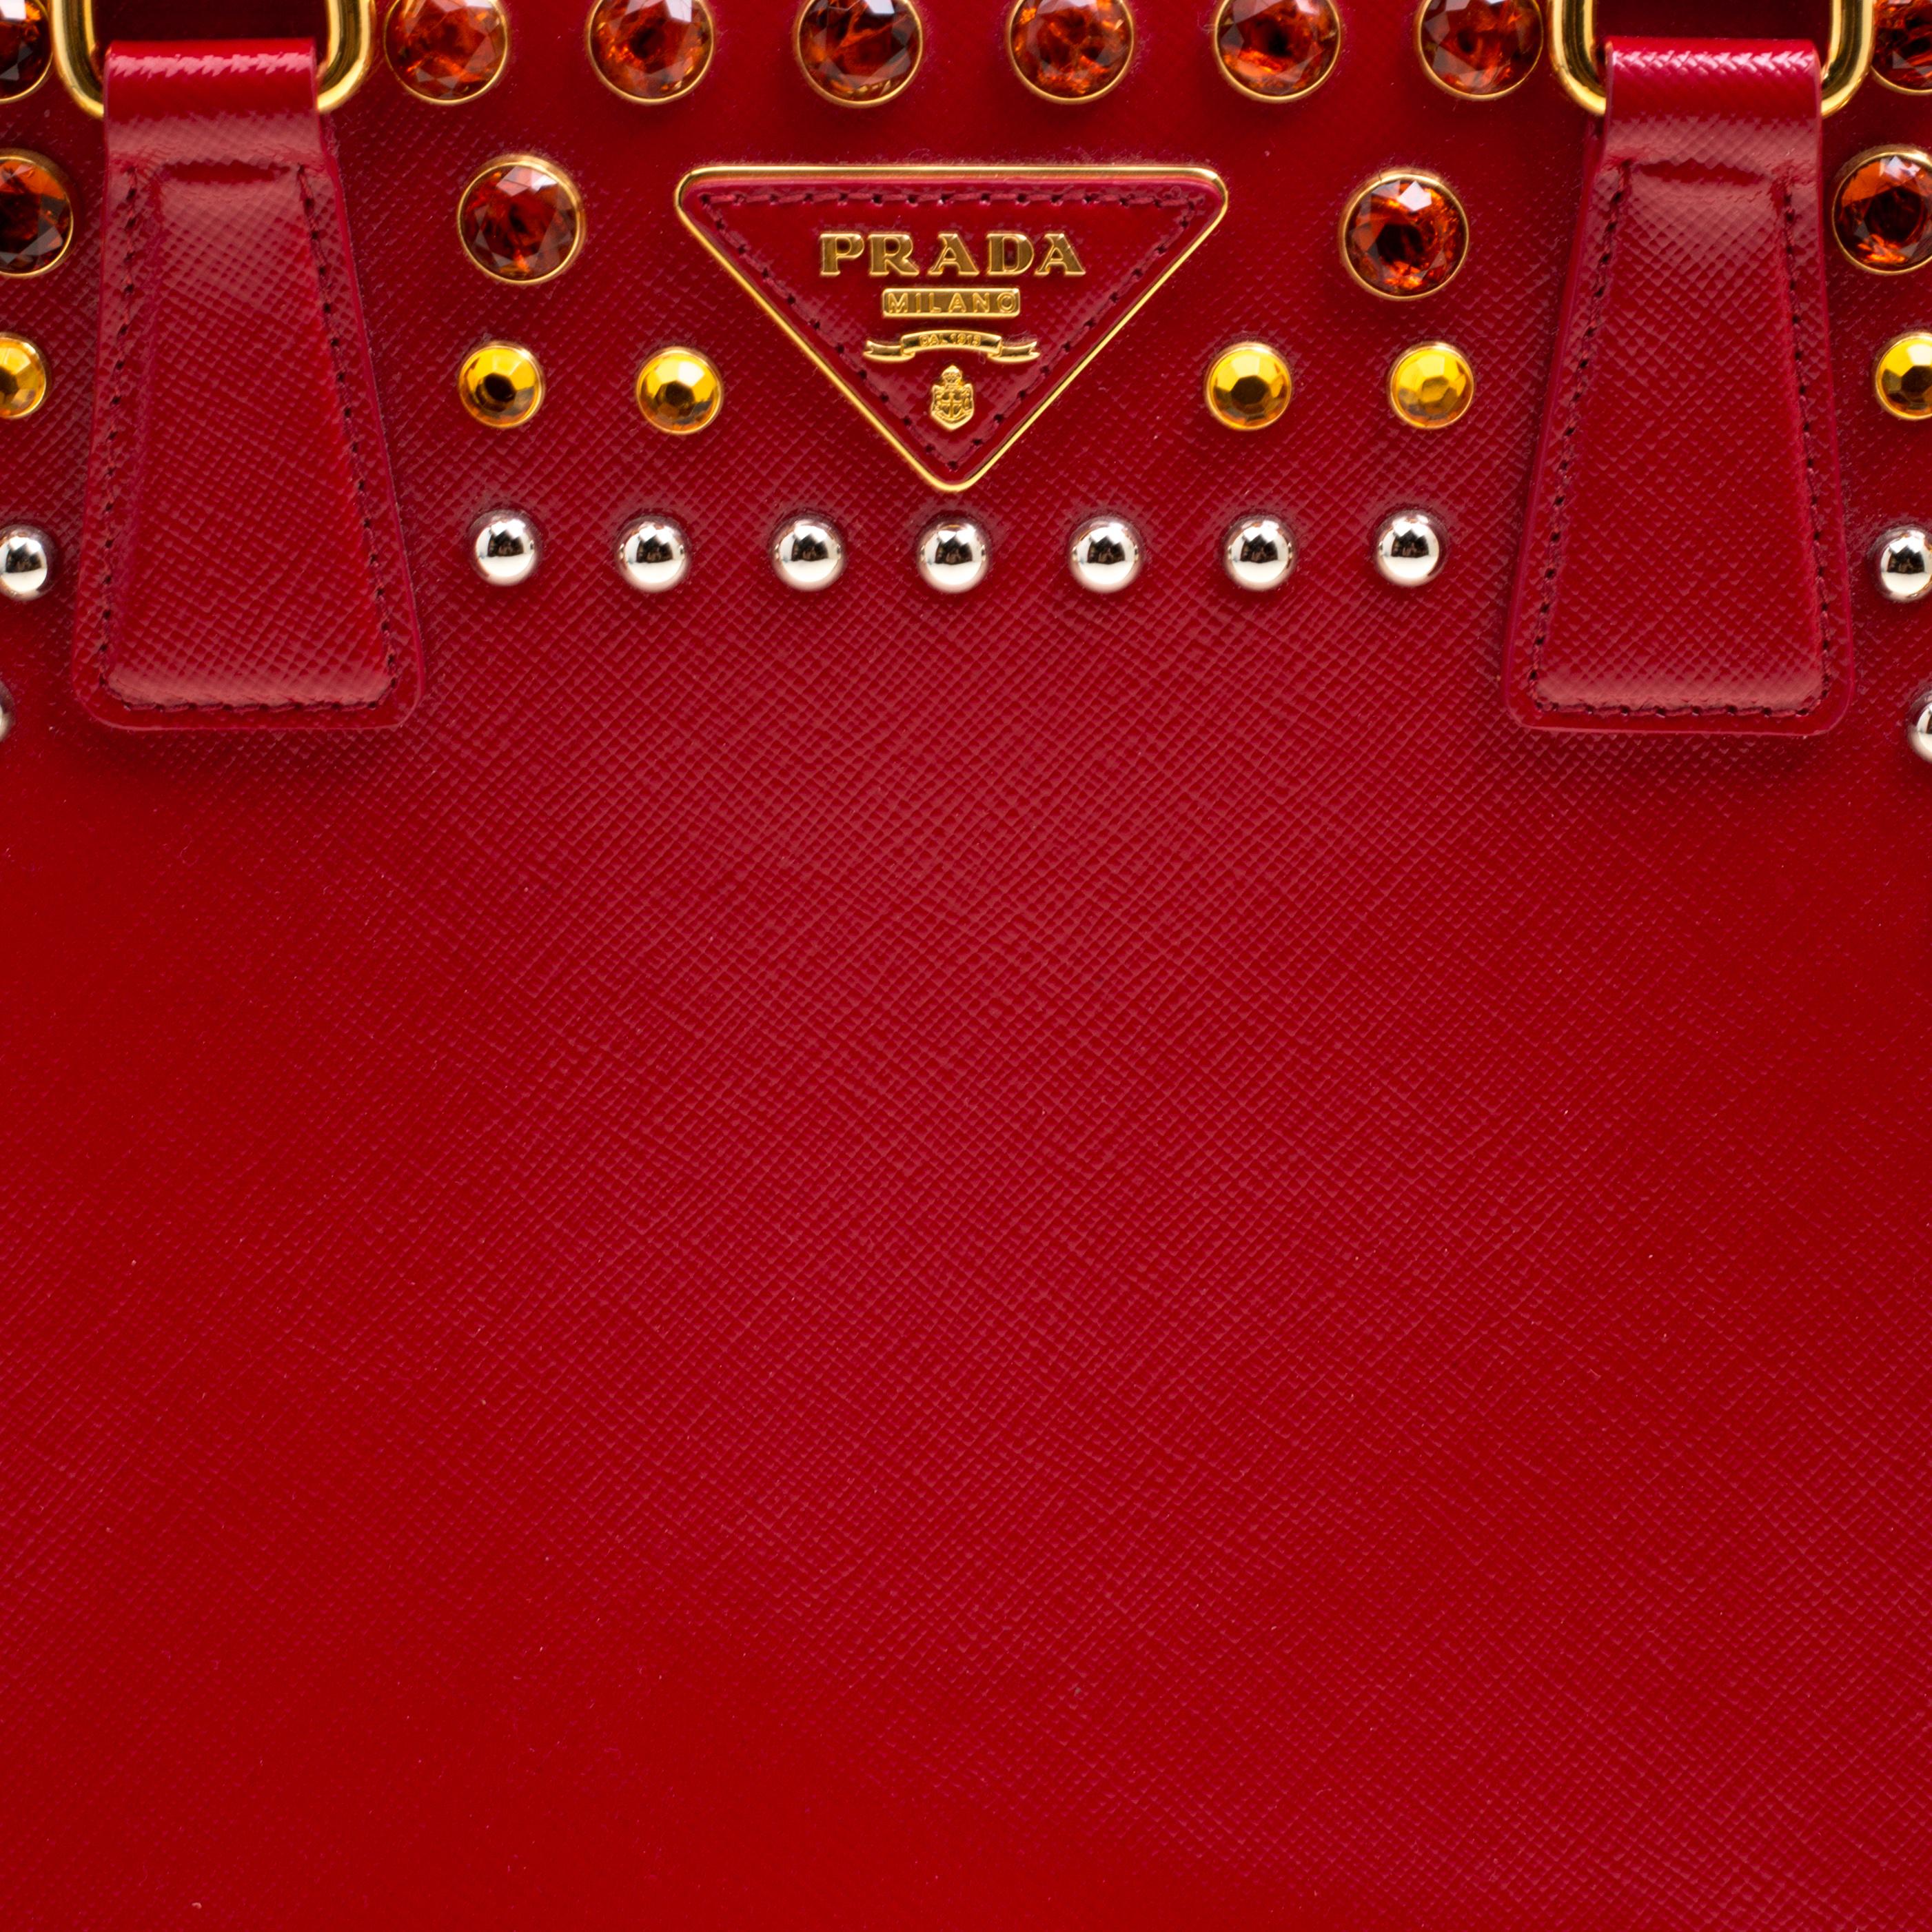 Prada Red Patent Leather Pyramid Frame Top Handle Bag 6